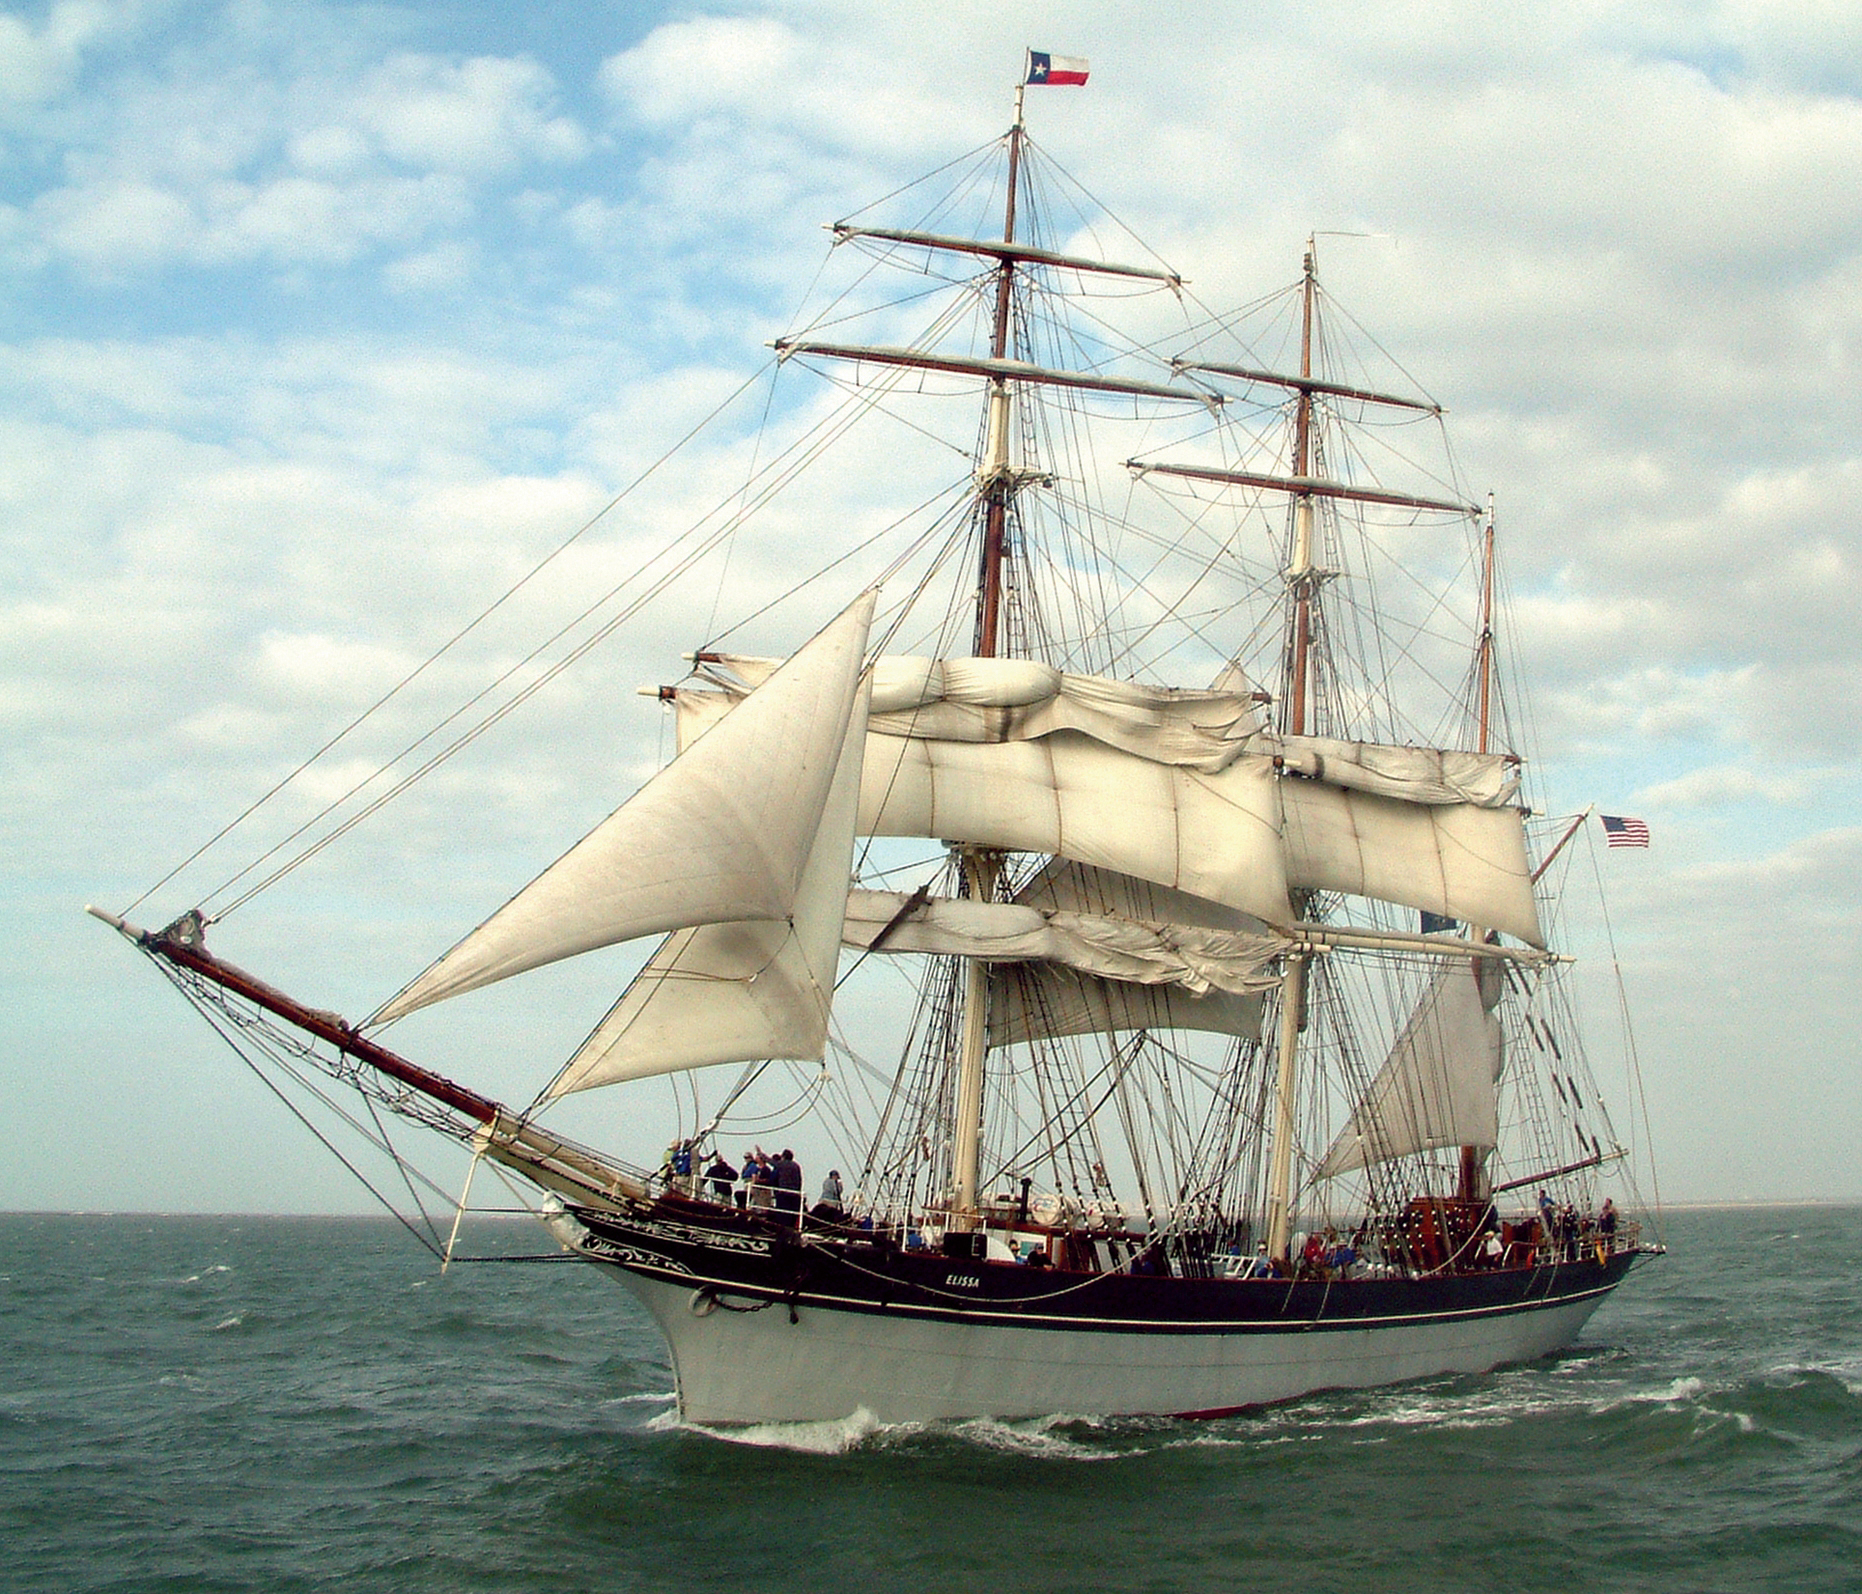 Galvestons tall ship Elissa no longer seaworthycorrosion issue